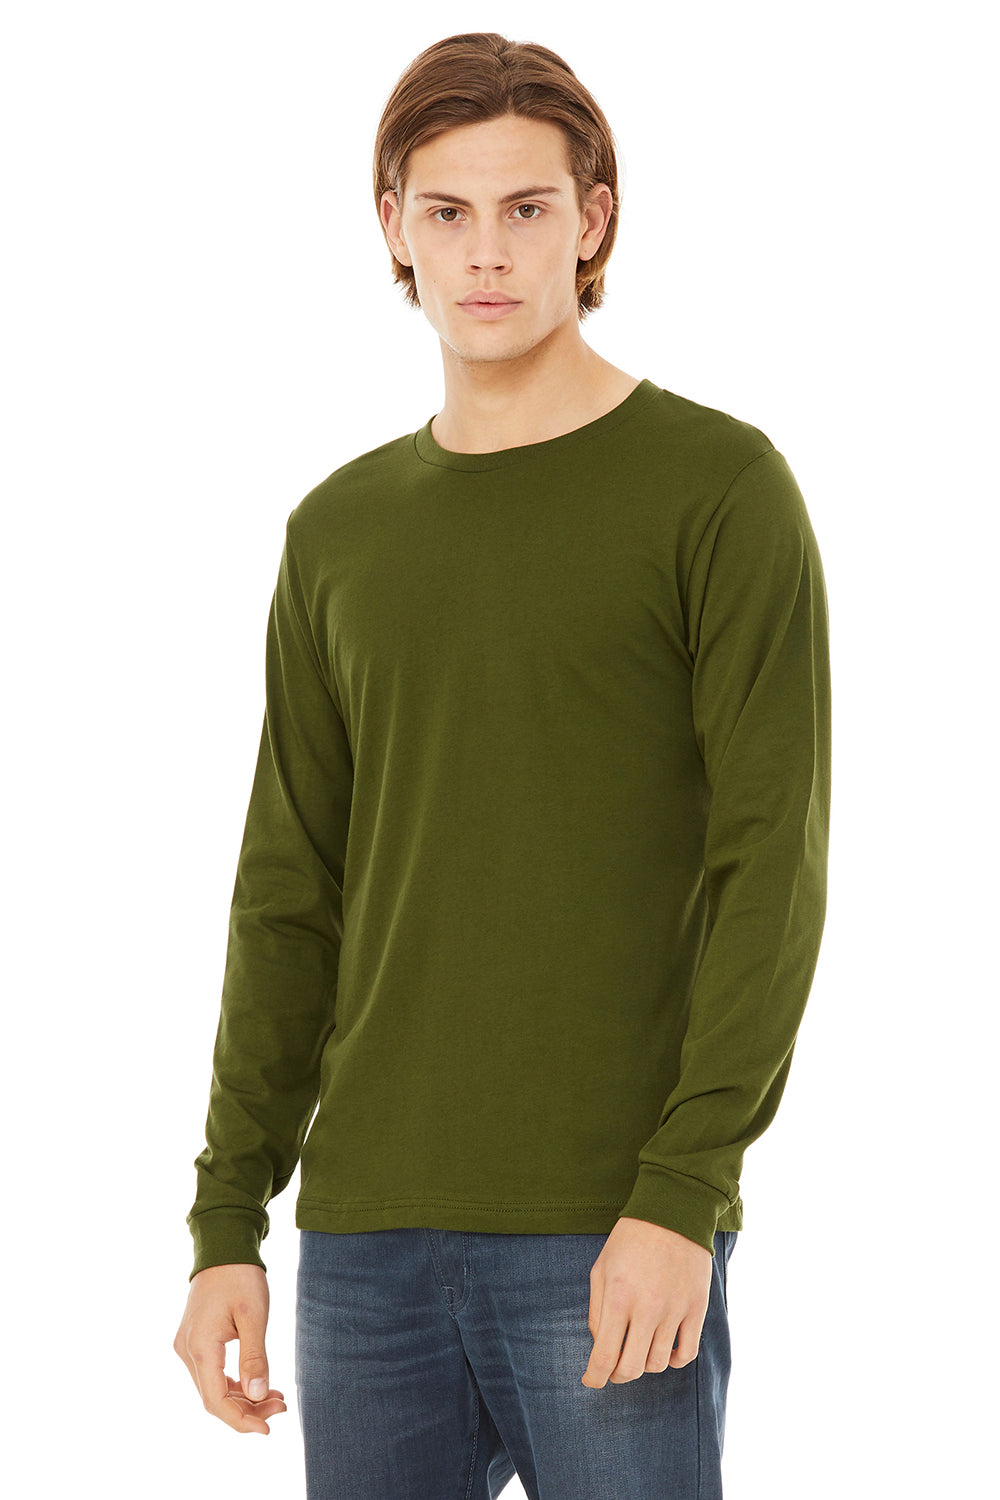 Bella + Canvas BC3501/3501 Mens Jersey Long Sleeve Crewneck T-Shirt Olive Green Model 3Q